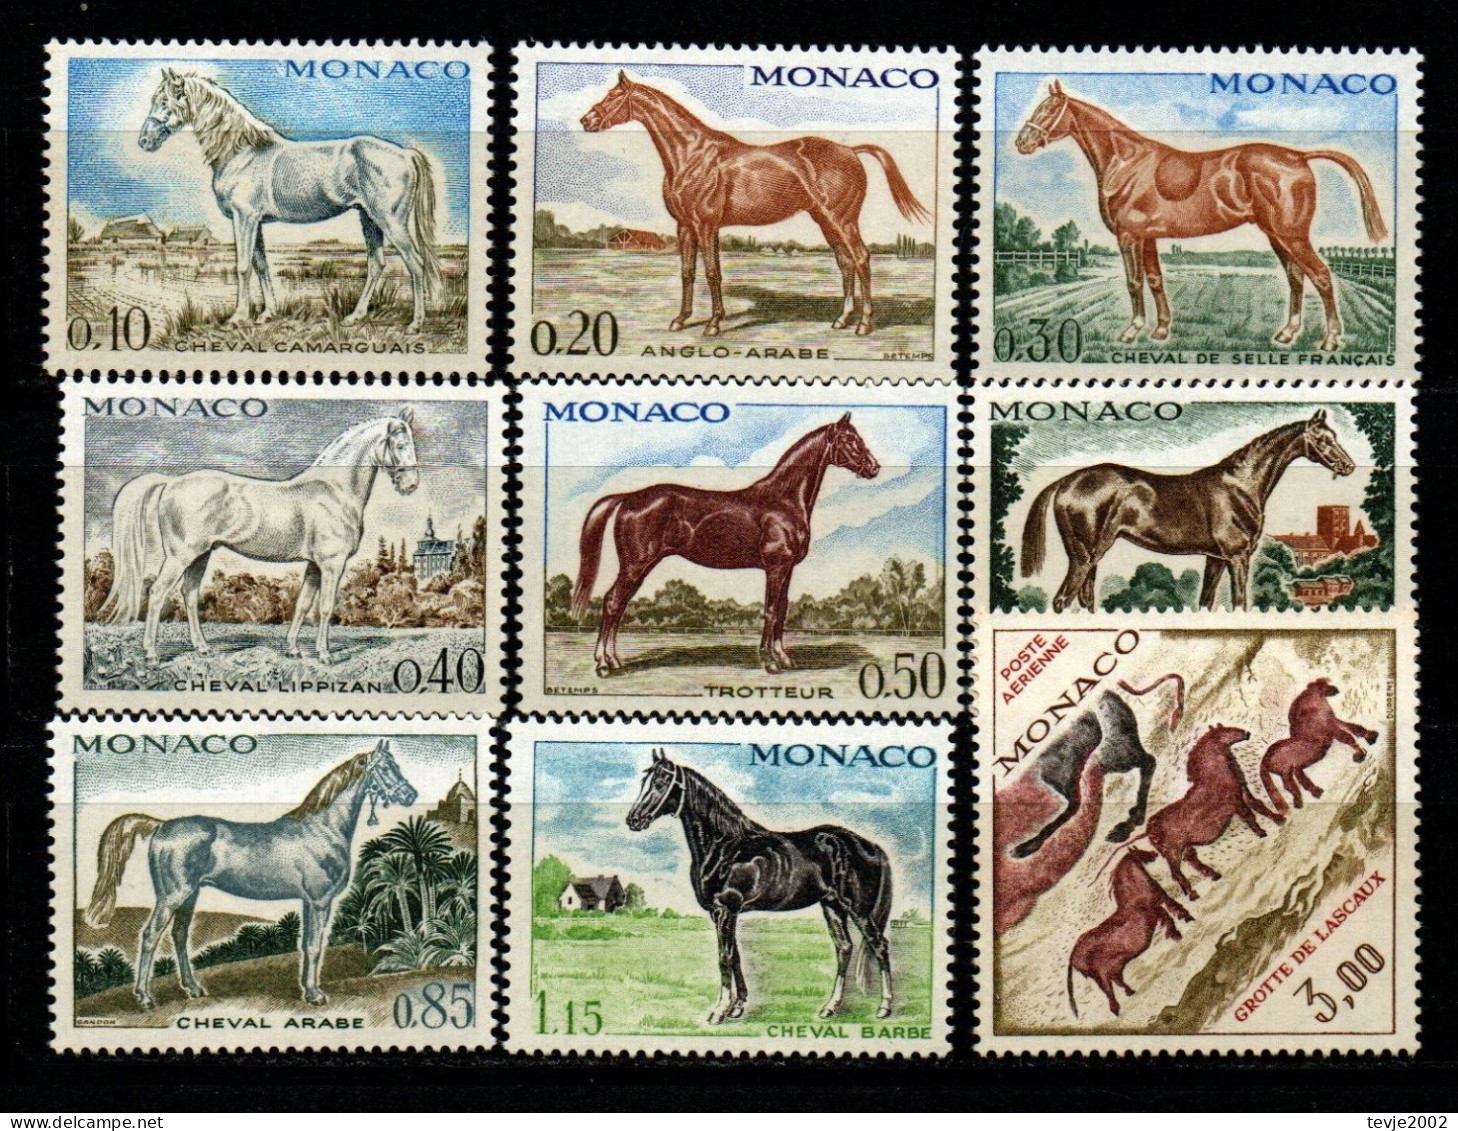 Monaco 1970 - Mi.Nr. 980 - 988 - Postfrisch MNH - Tiere Animals Pferde Horses - Paarden